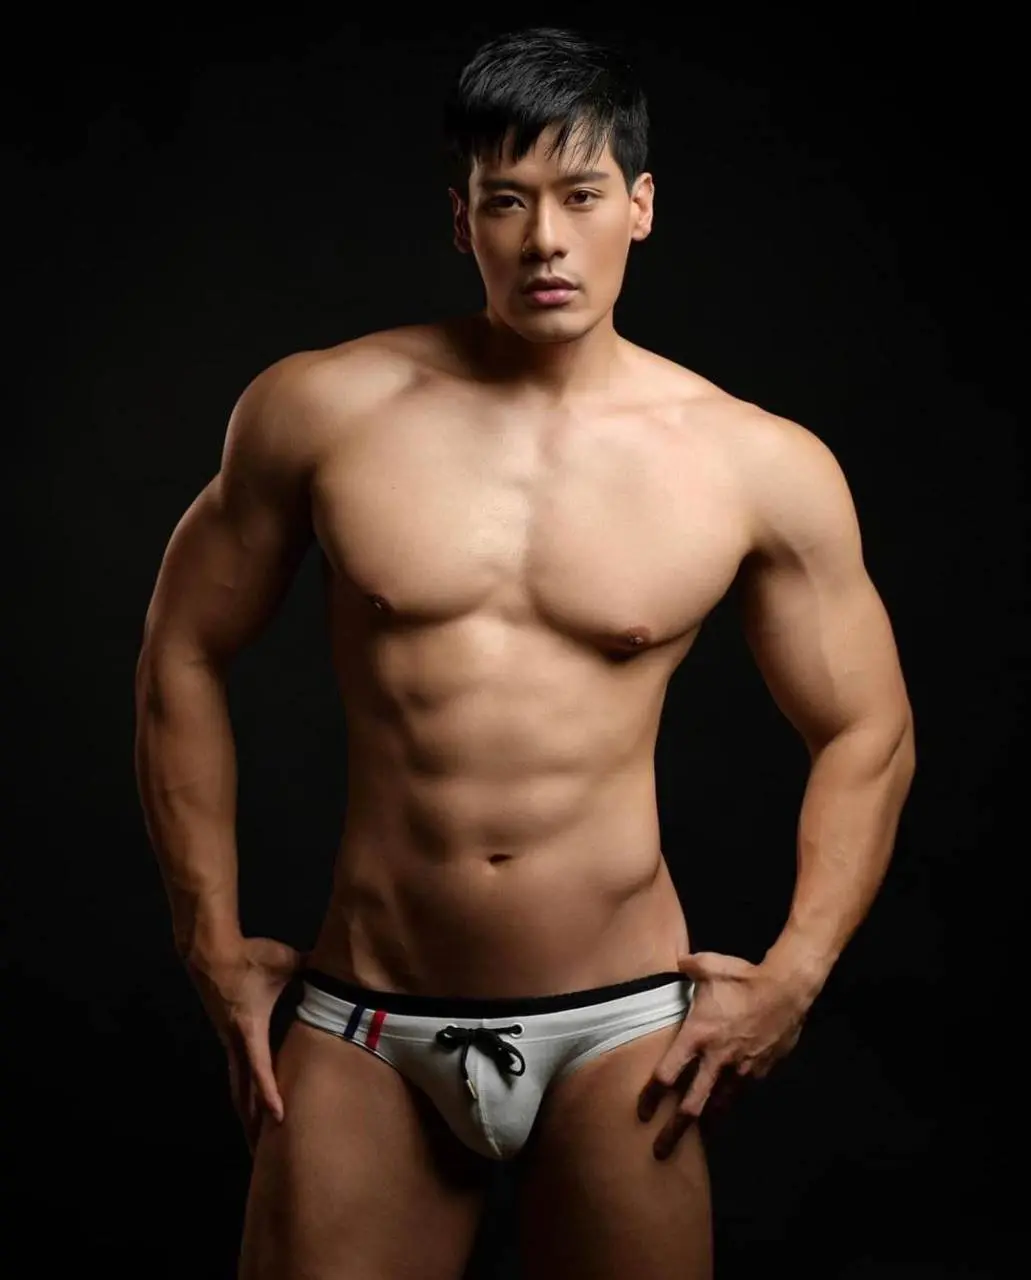 Hot men in underwear 646